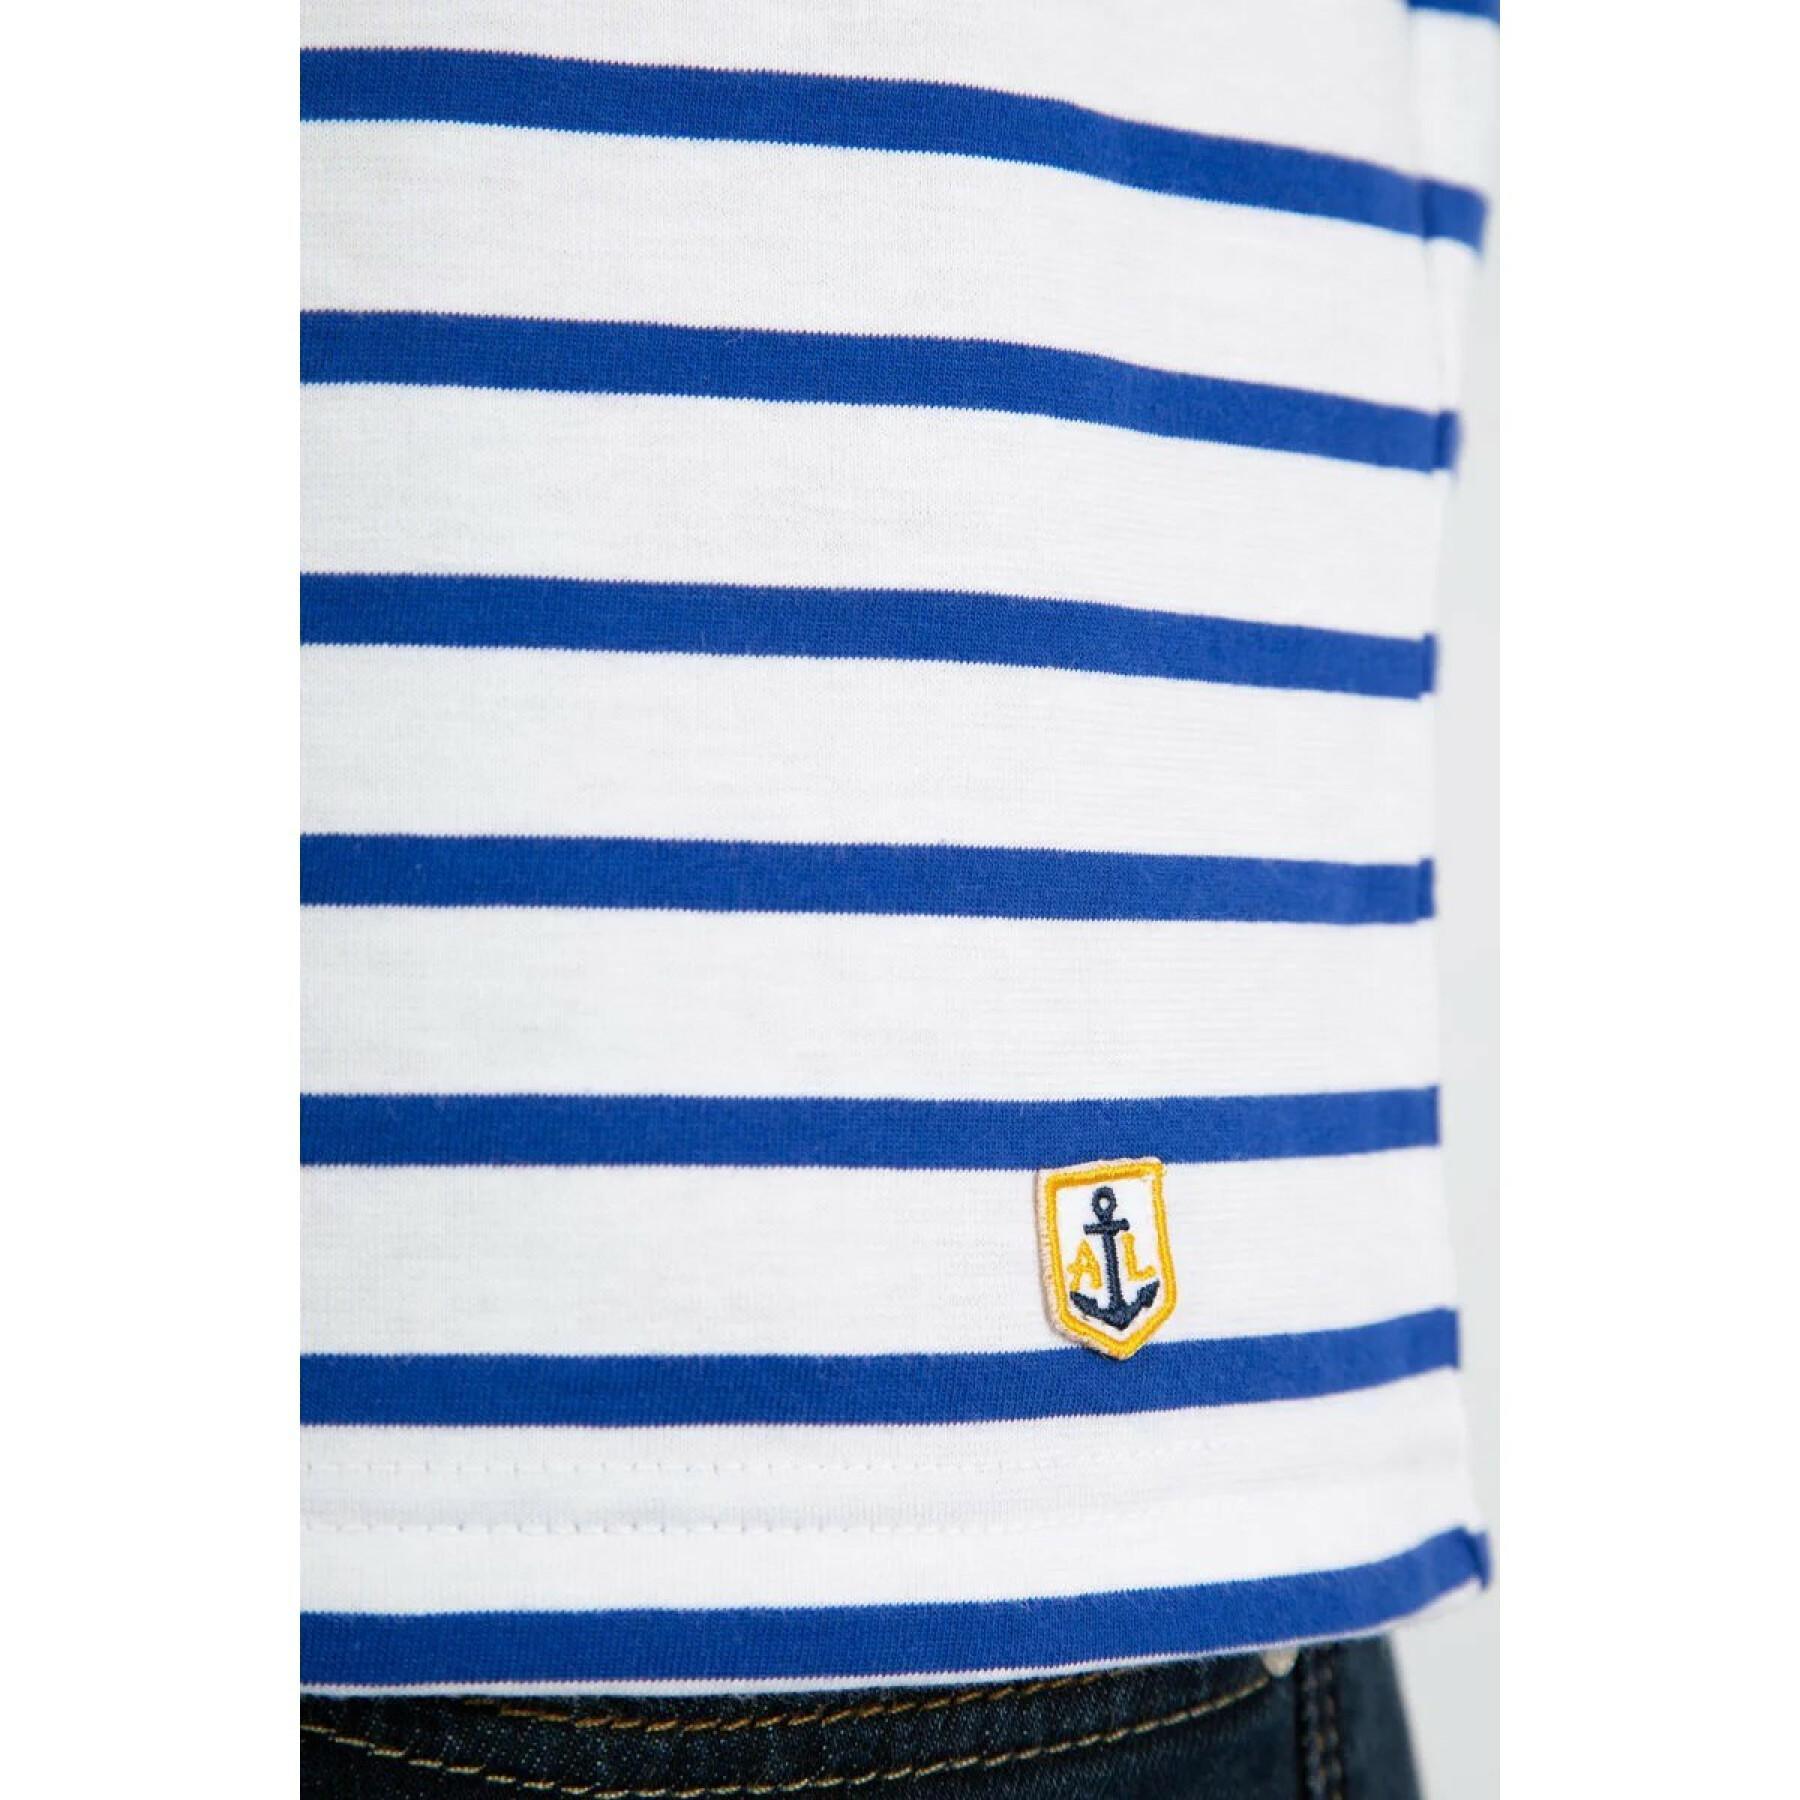 Heritage sailor T-shirt Armor-Lux plozévet